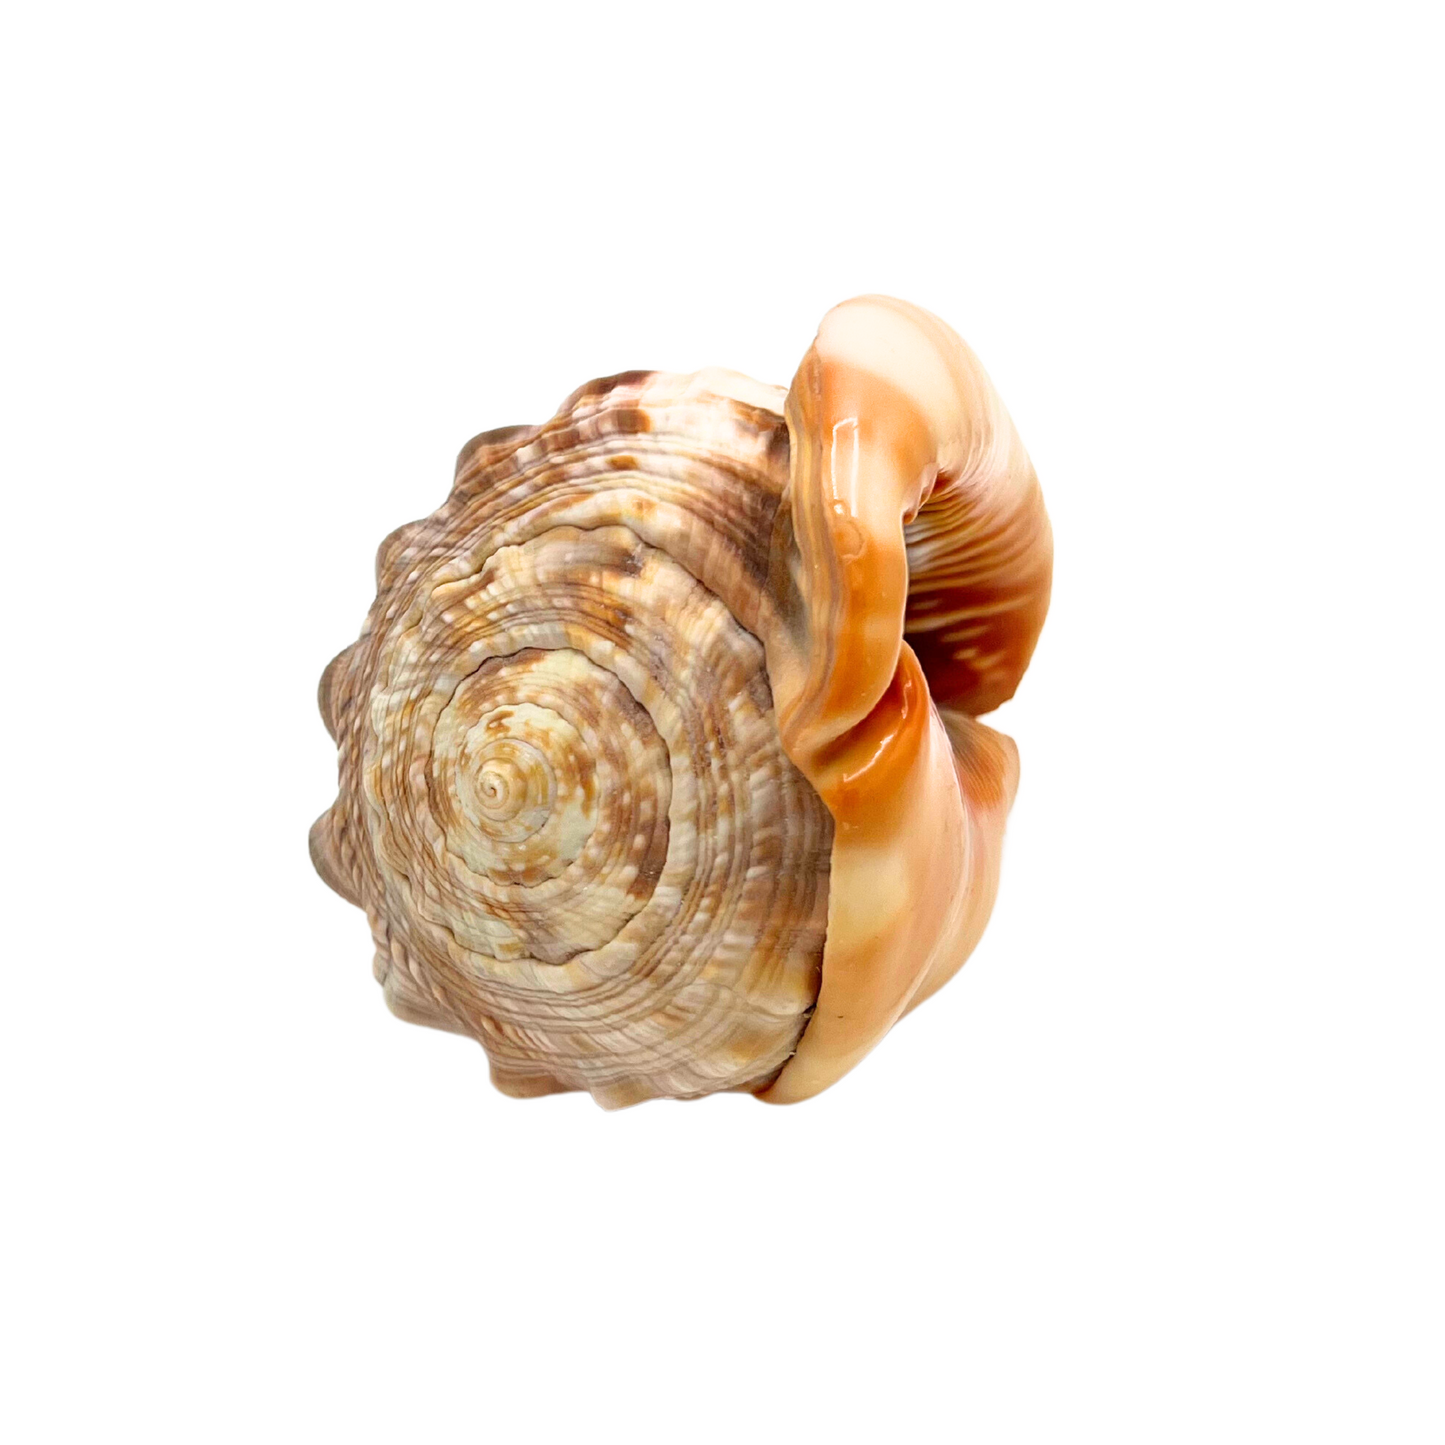 helment conch shell